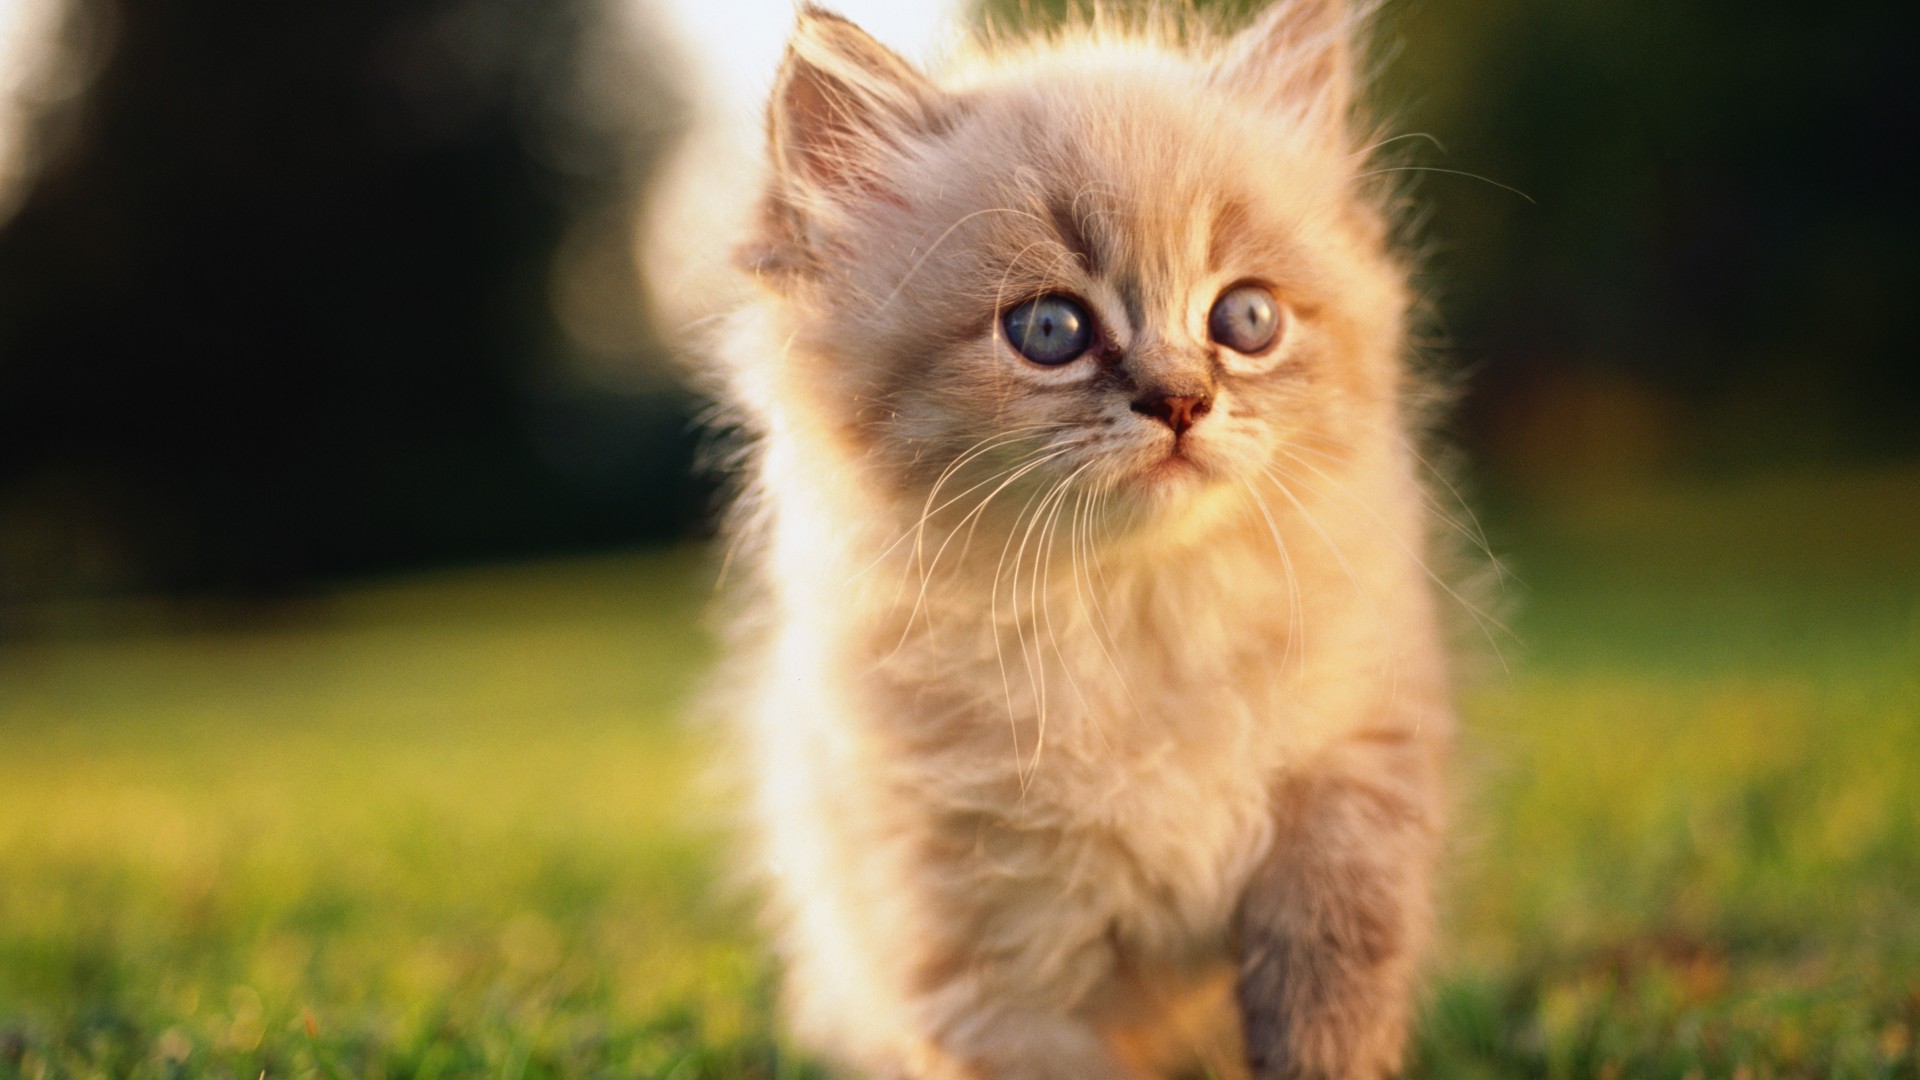 Cat, kitten, blue, eyes, gray, wool, cute, animal, pet, green grass, nature (horizontal)